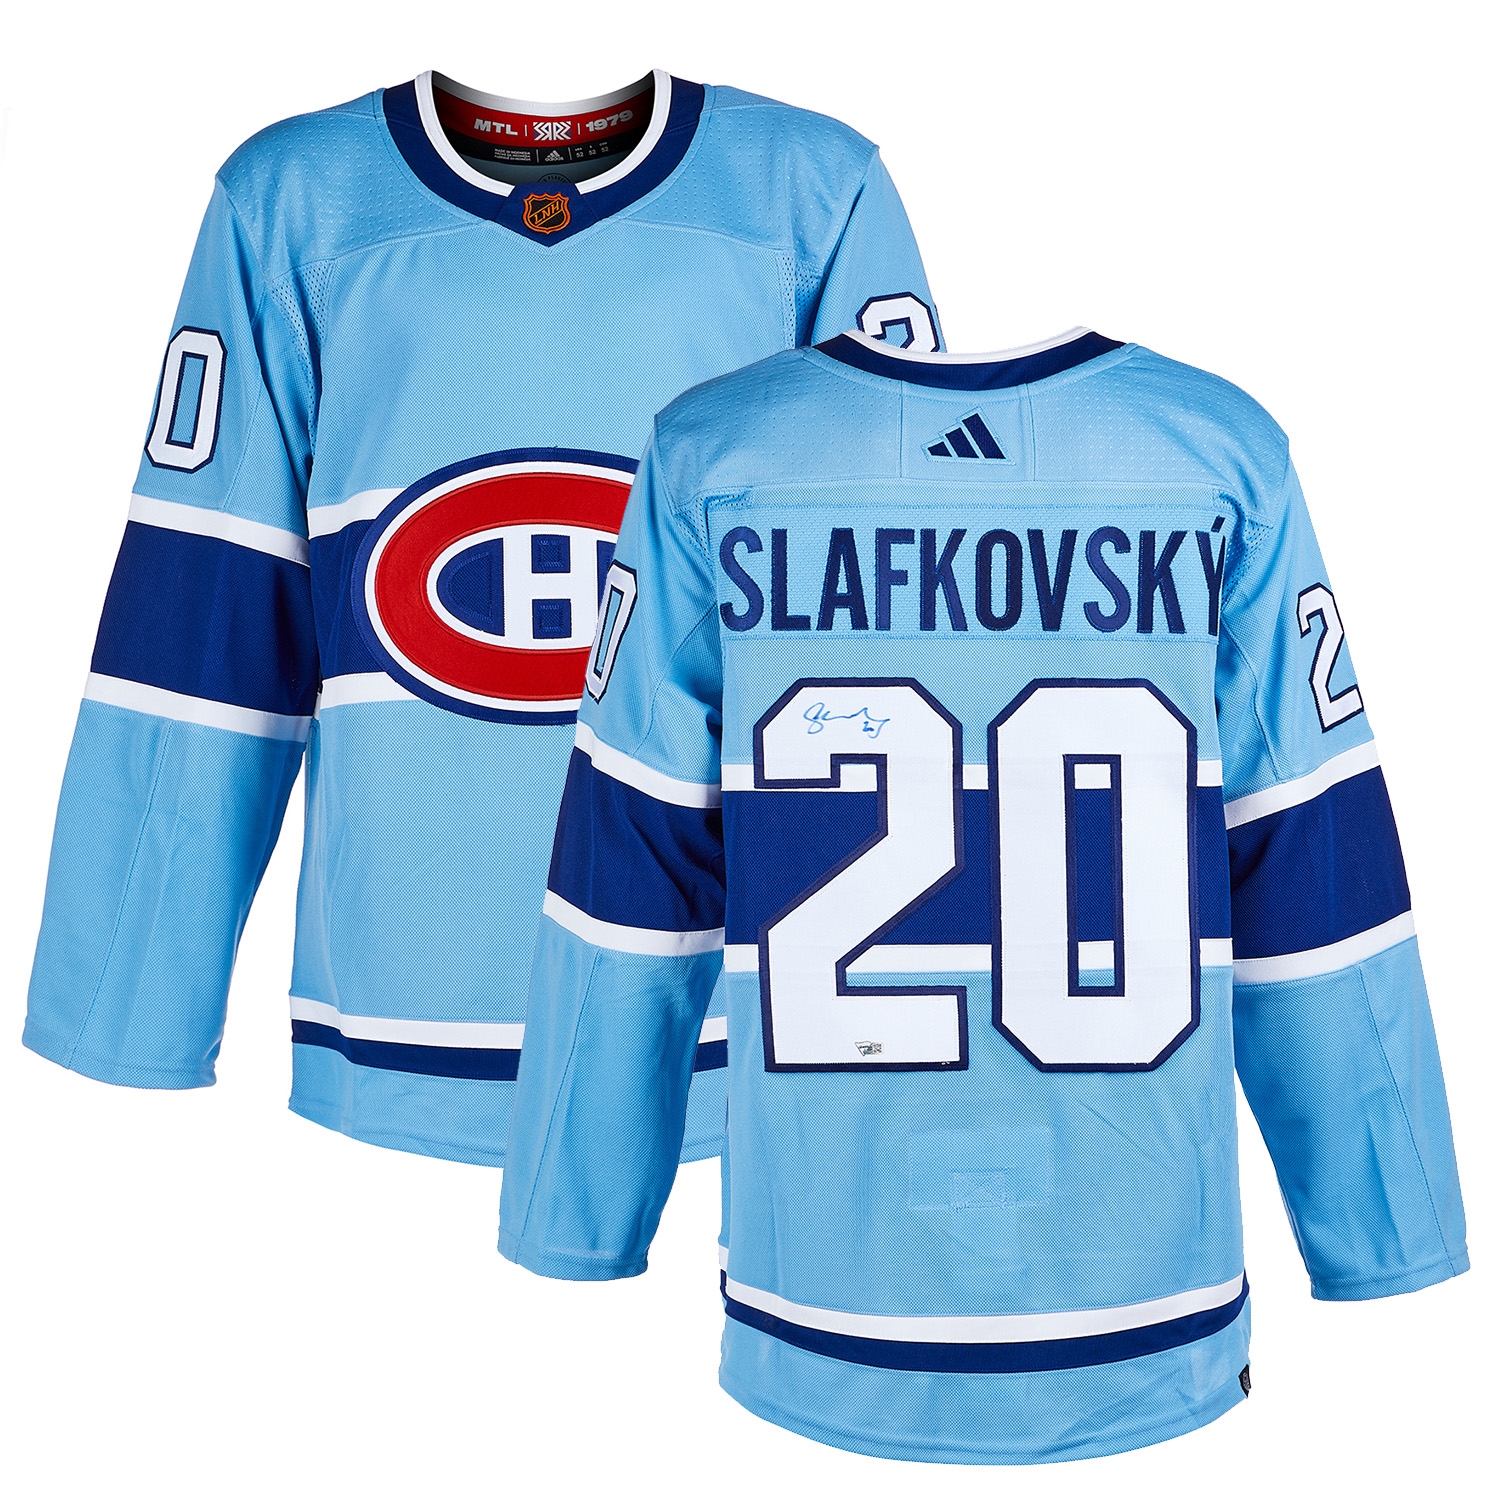 Juraj Slafkovsky Signed Montreal Canadiens Reverse Retro 2.0 adidas Jersey